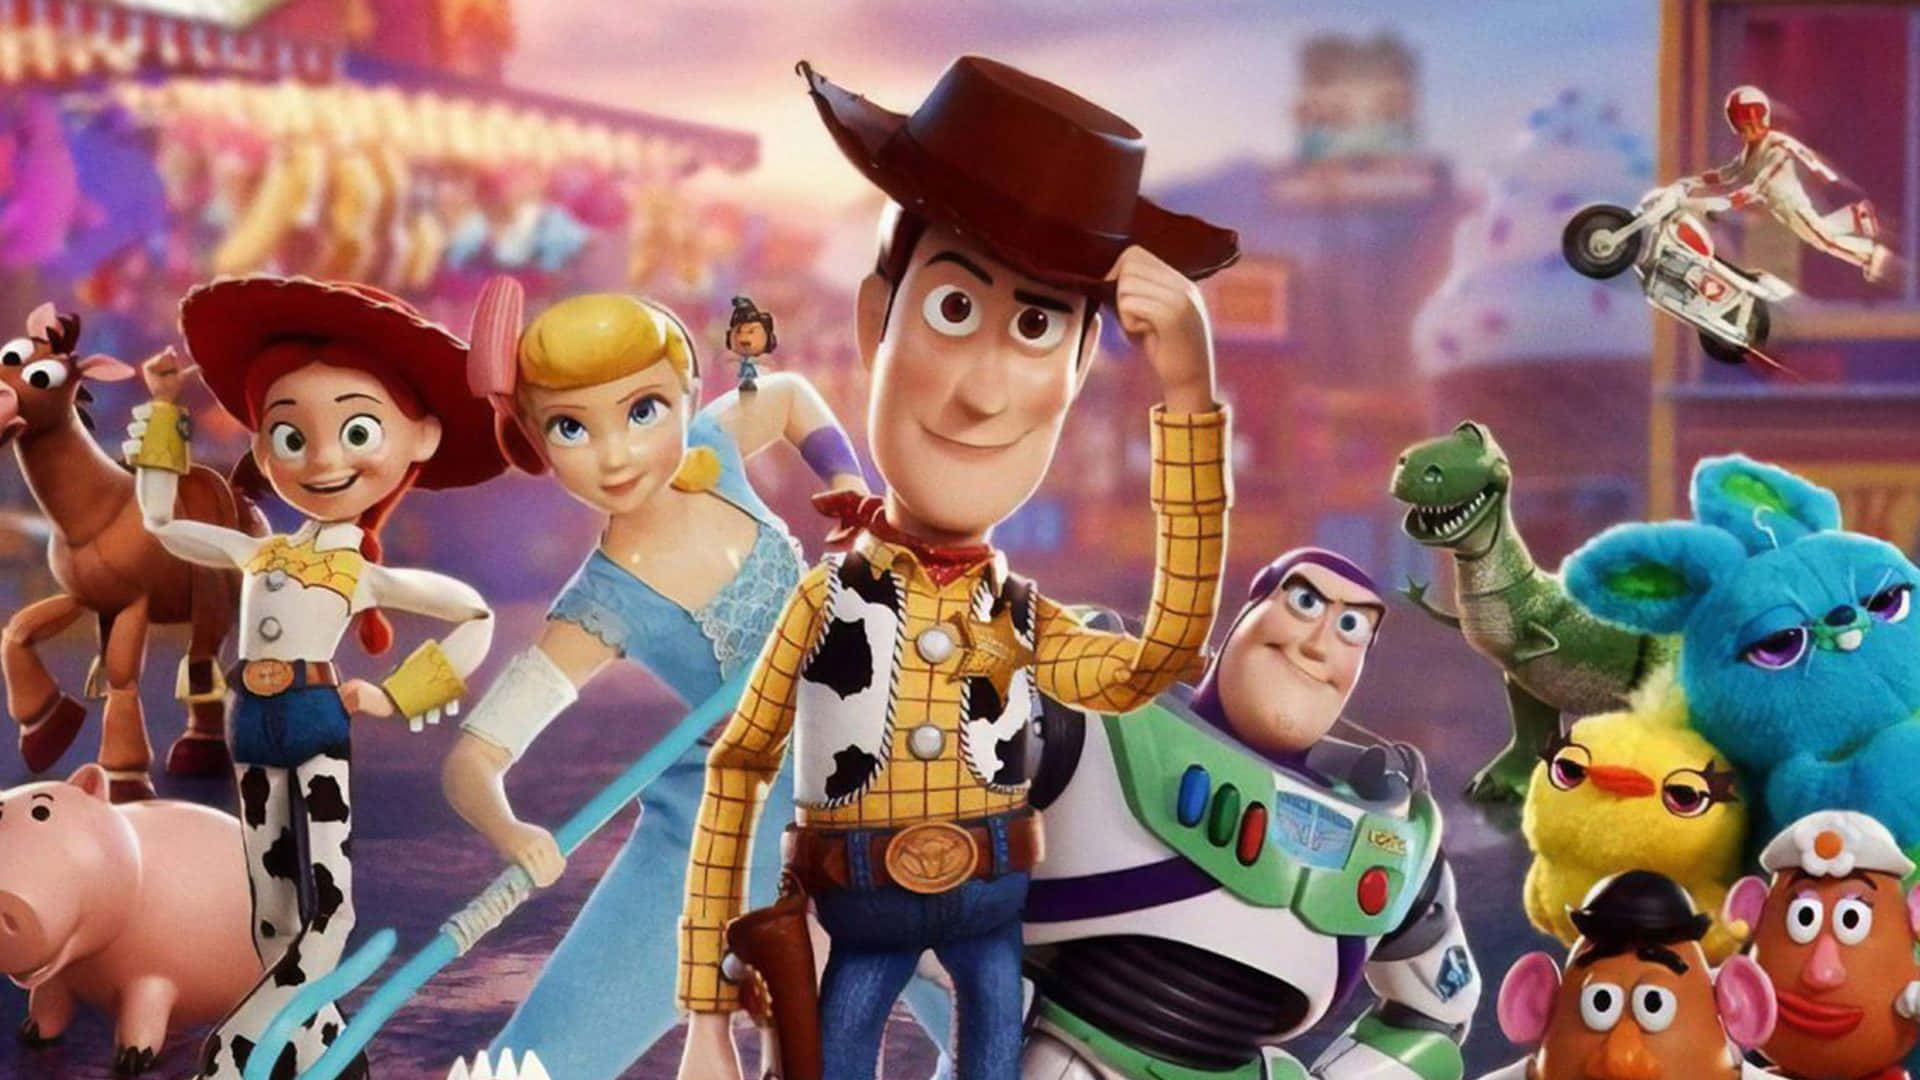 Forky,en Nyfunnen Leksak I Toy Story 4, Avslöjas Som Den Senaste Besättningsmedlemmen.